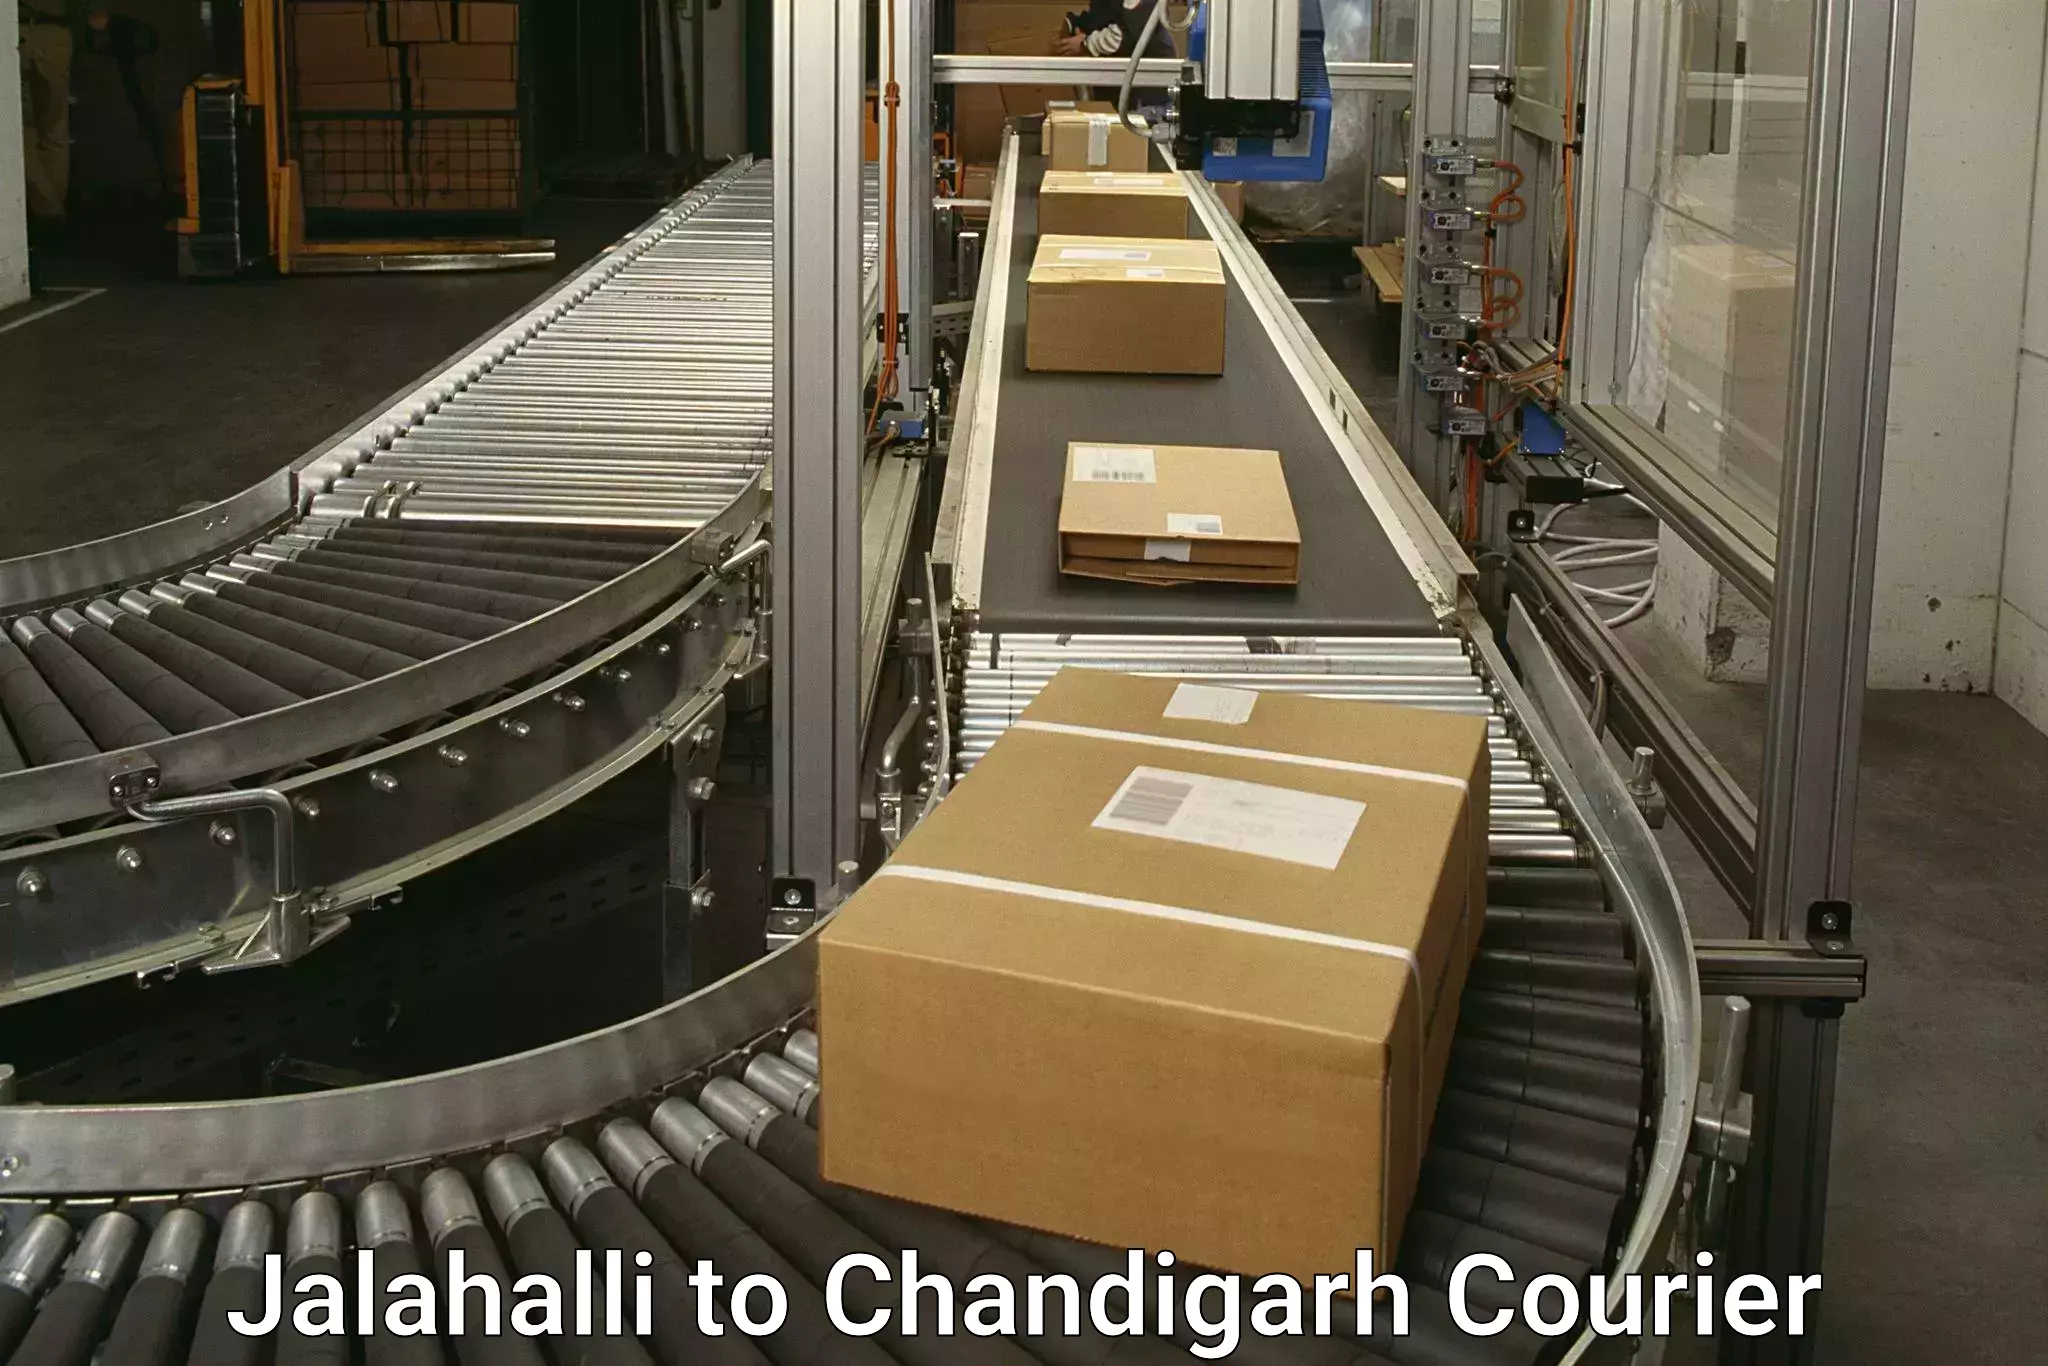 High-speed parcel service Jalahalli to Chandigarh